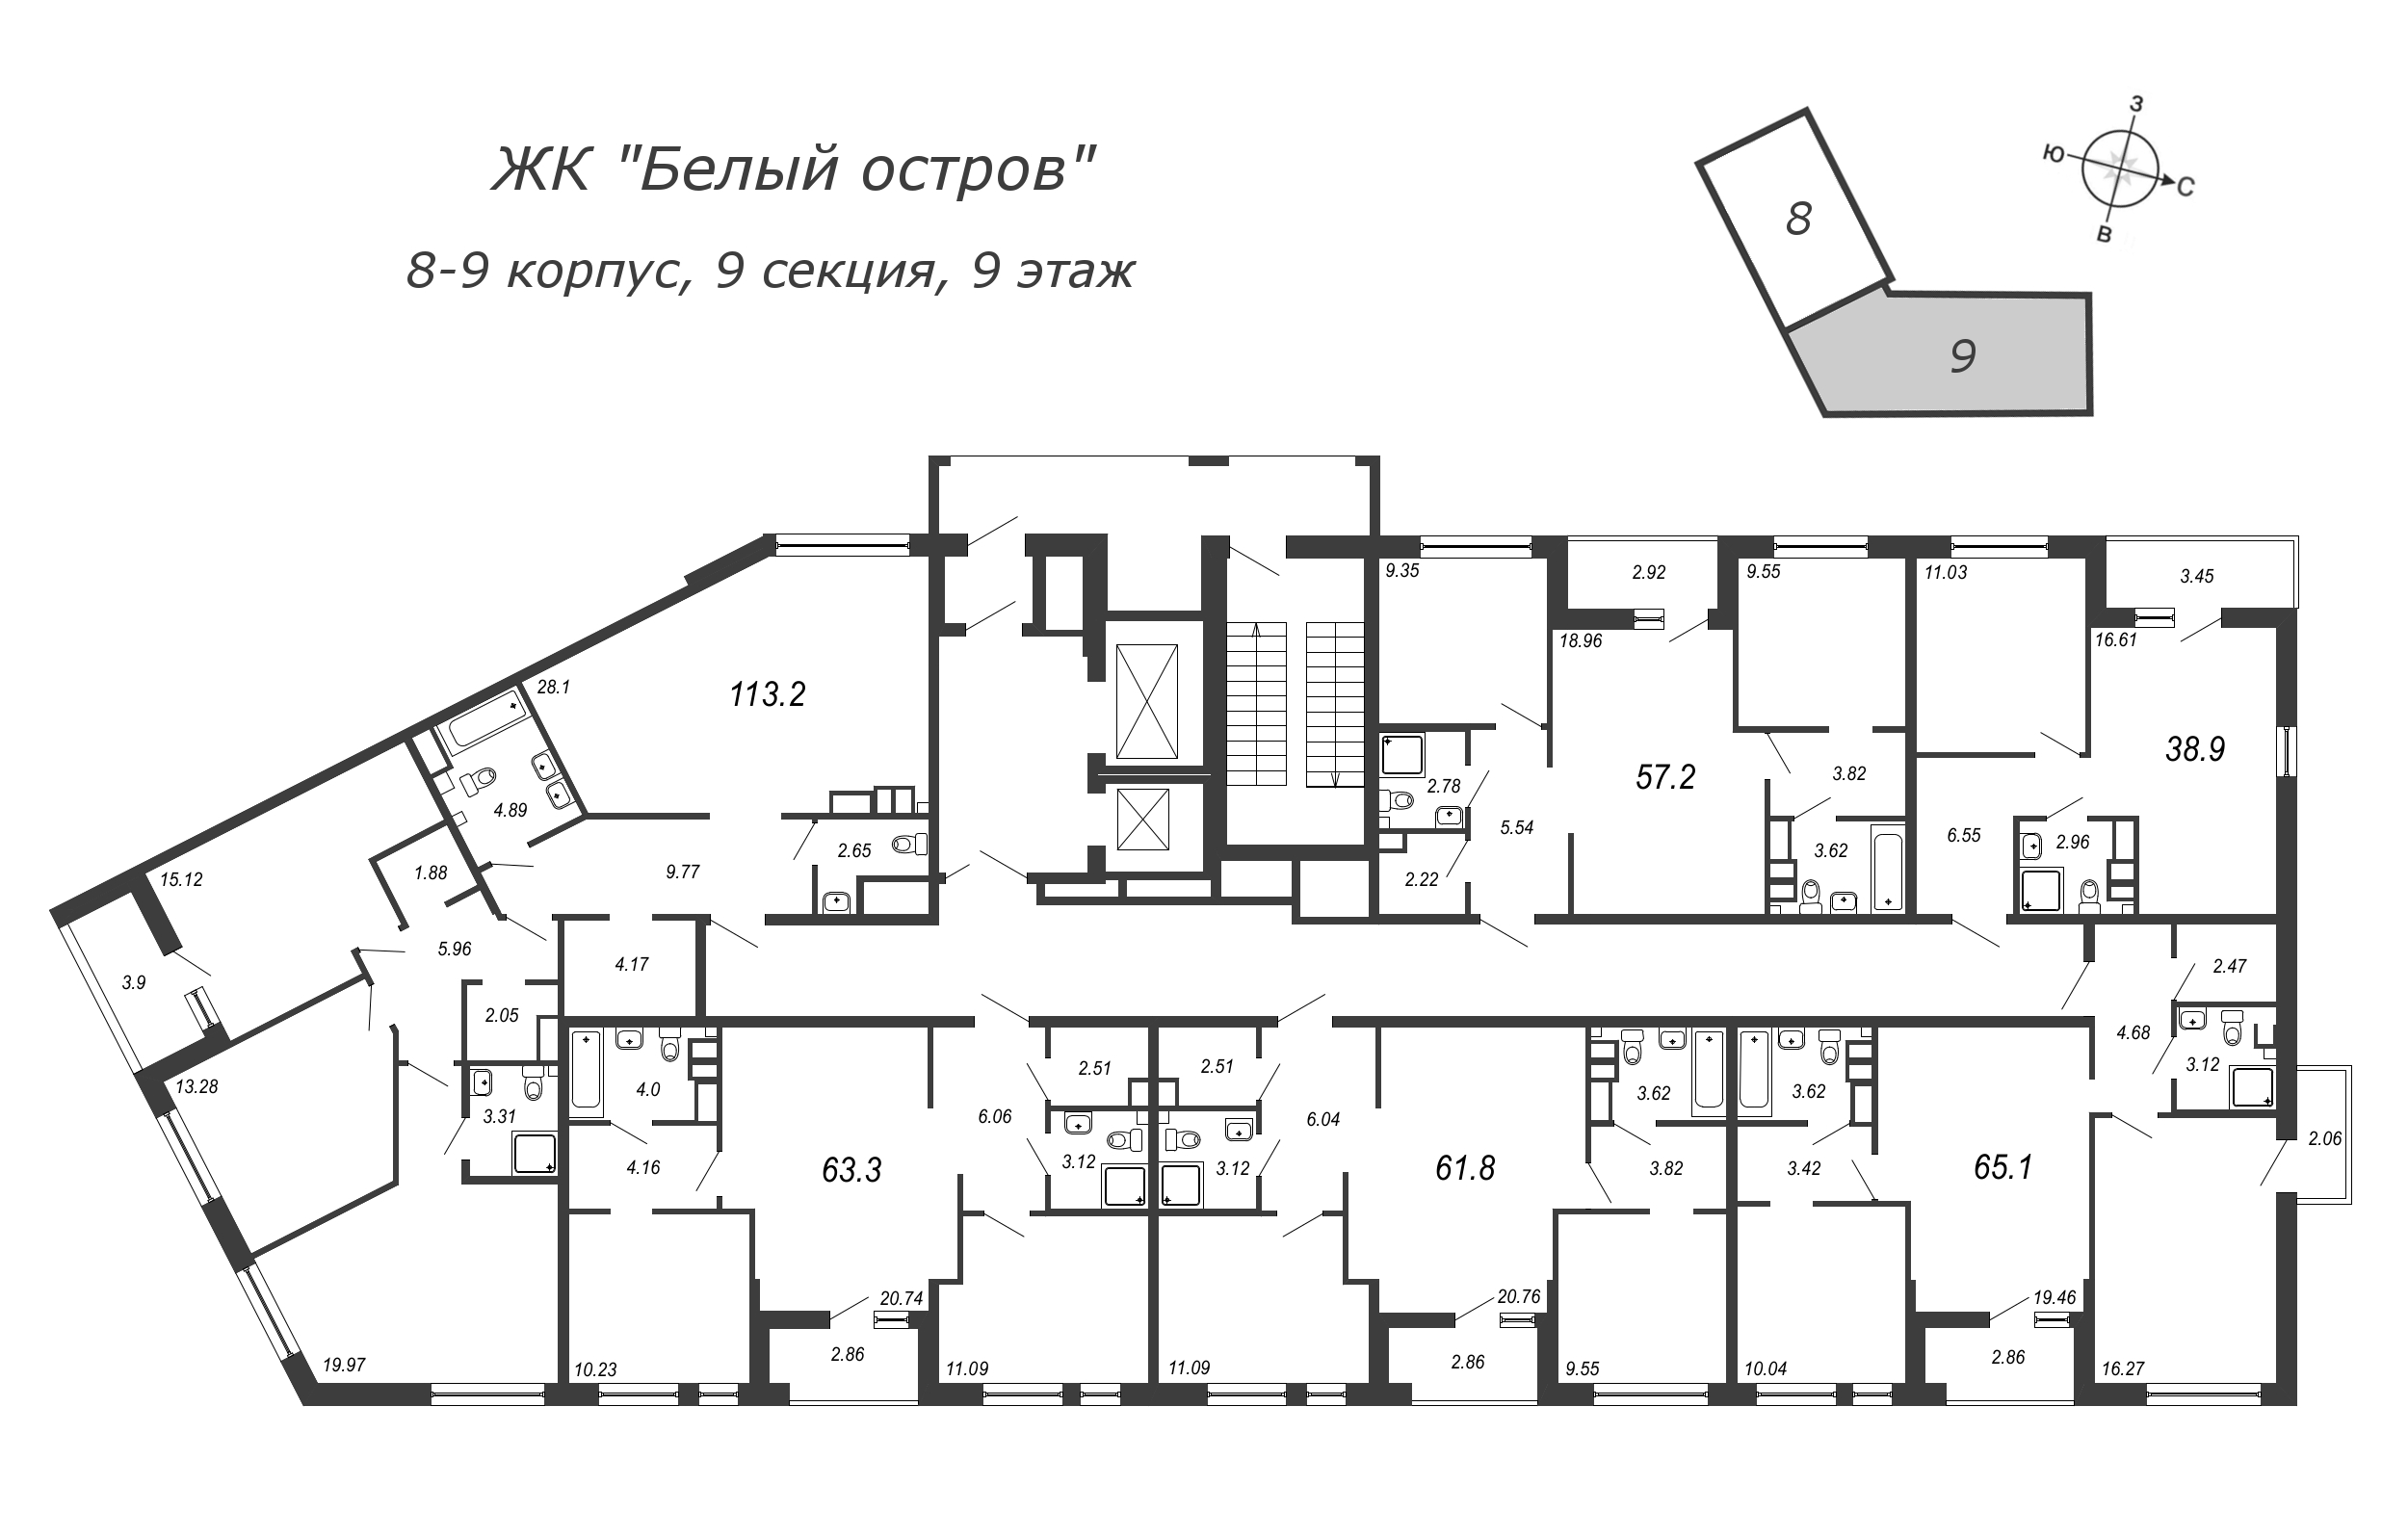 4-комнатная (Евро) квартира, 115.1 м² - планировка этажа